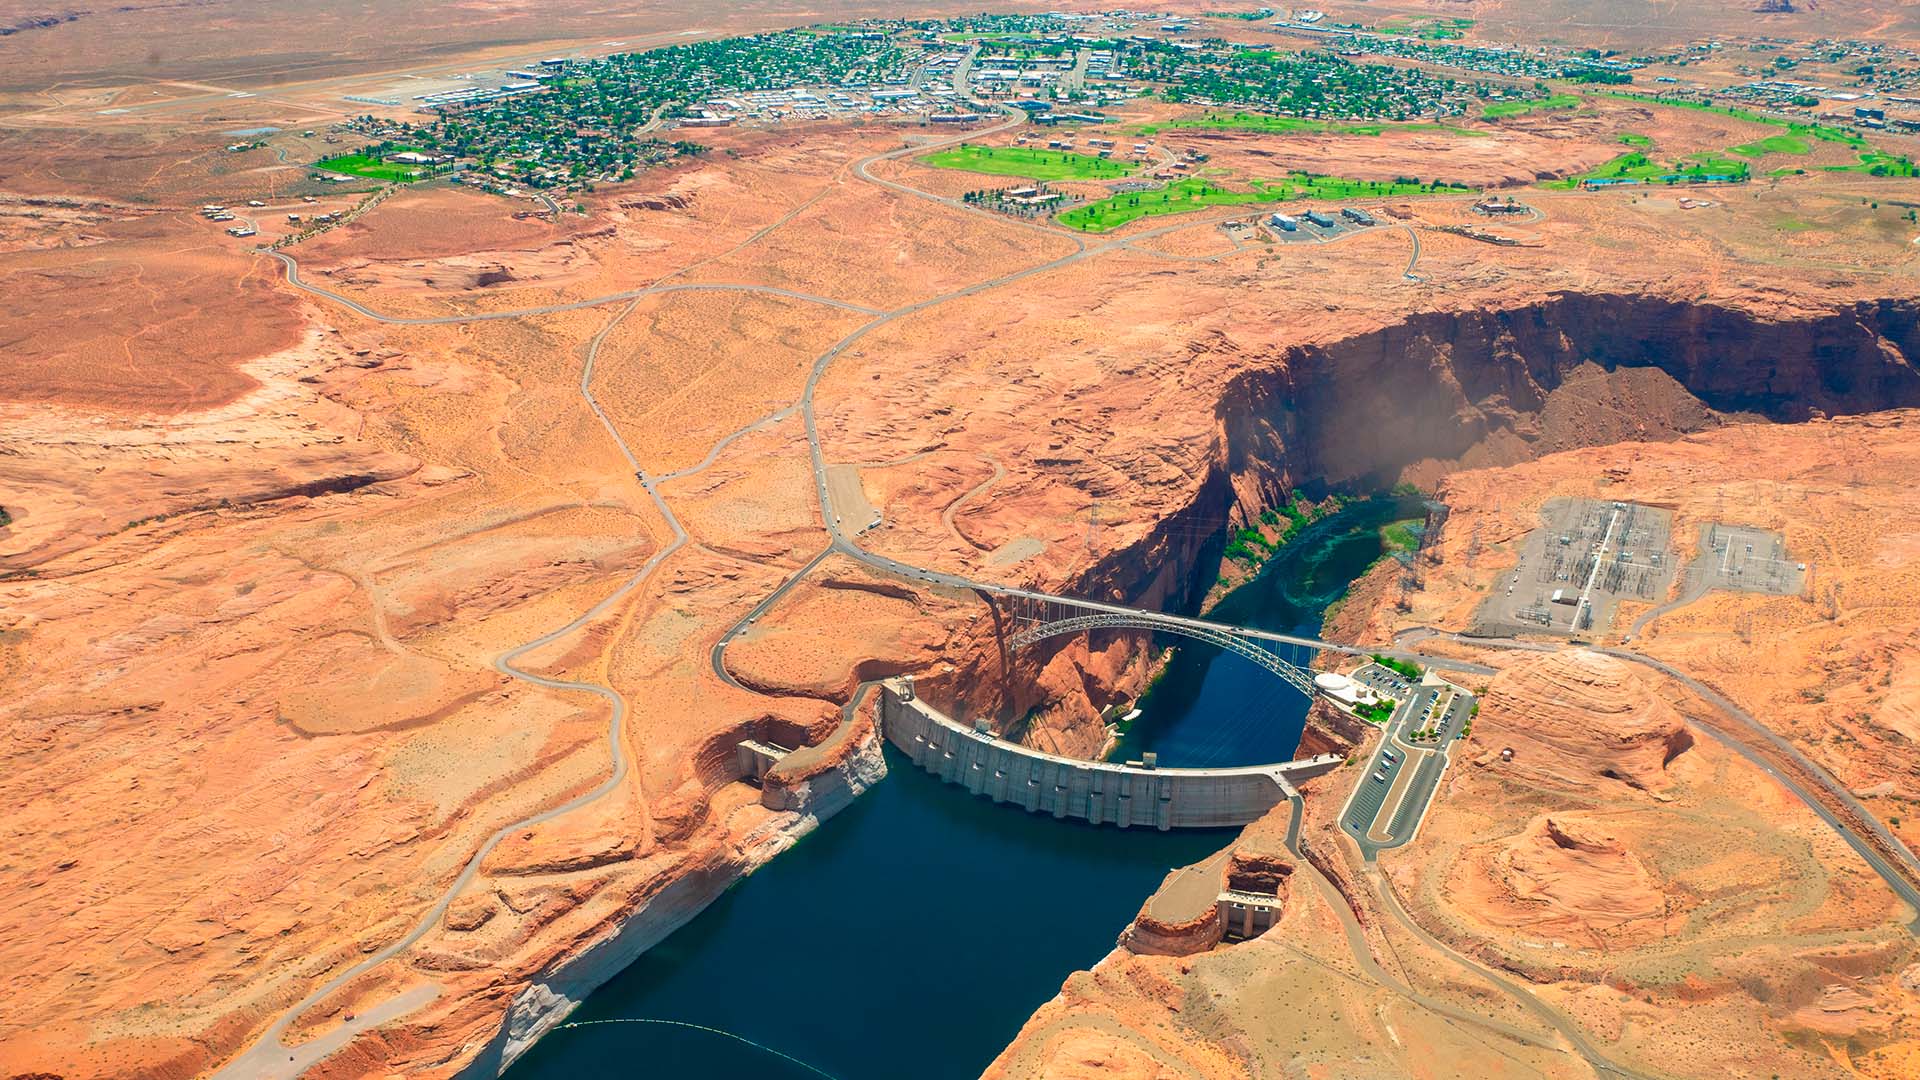 Glen Canyon Dam: the Dam of Records - We Build Value